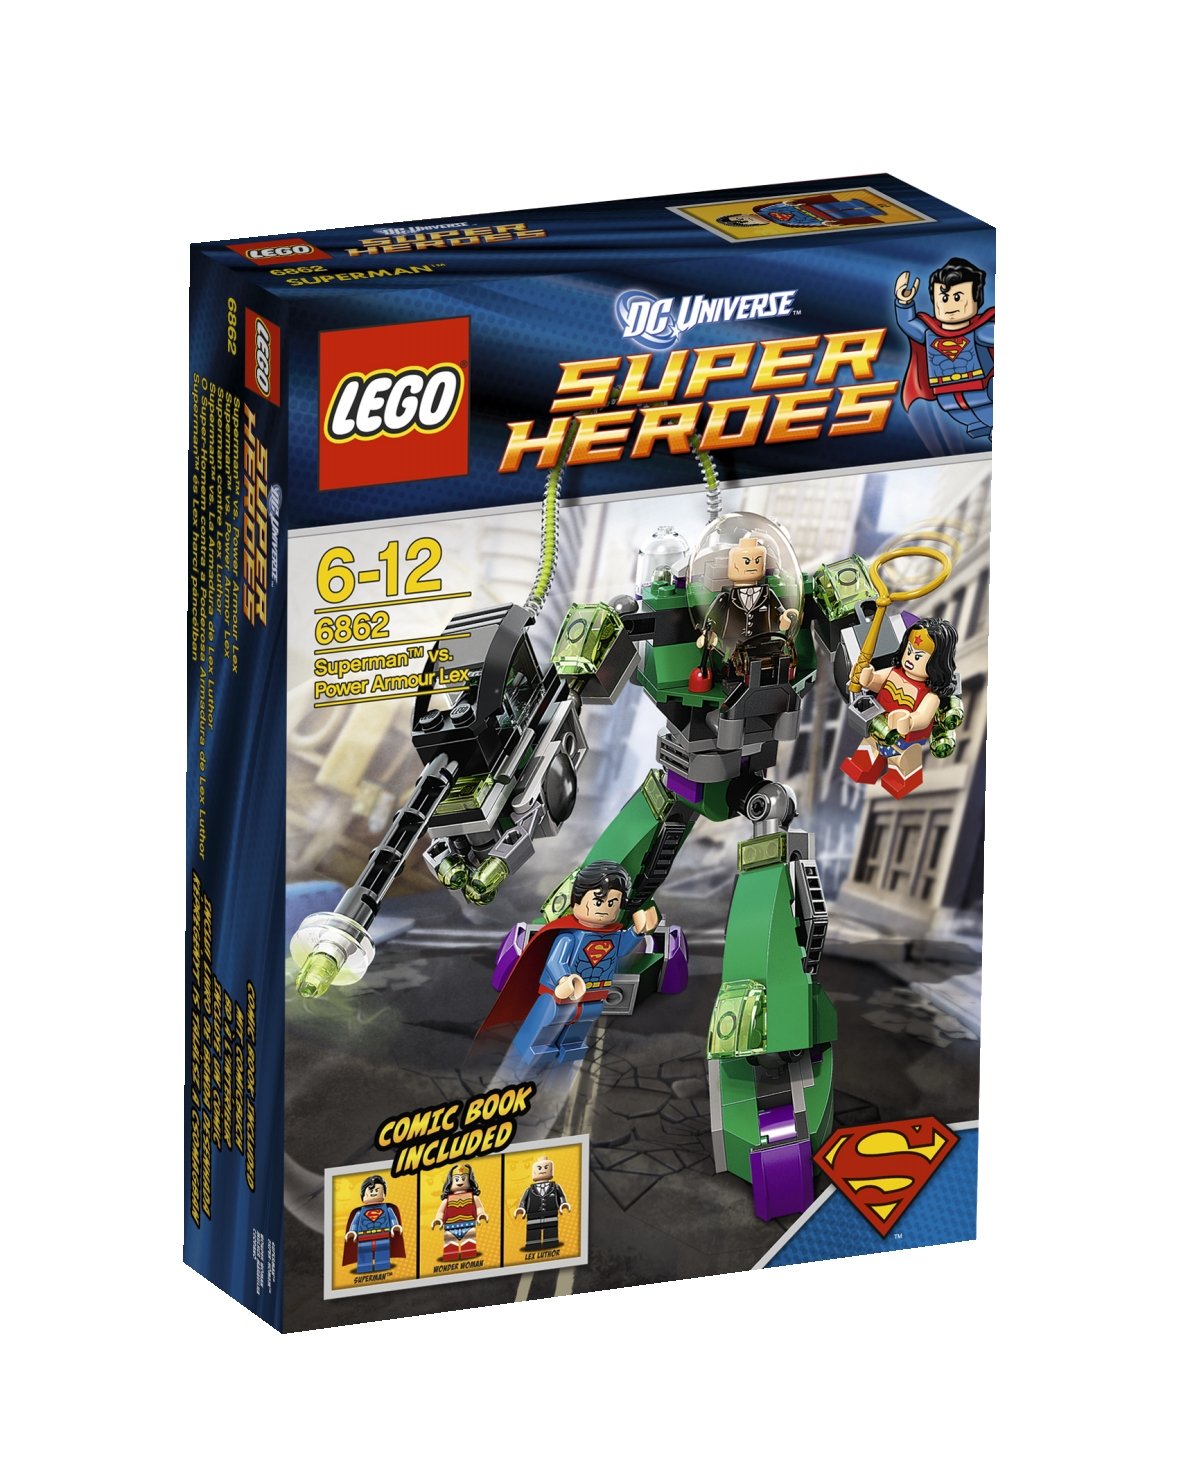 LEGO Super Heroes Superman Vs Power Armor Lex 